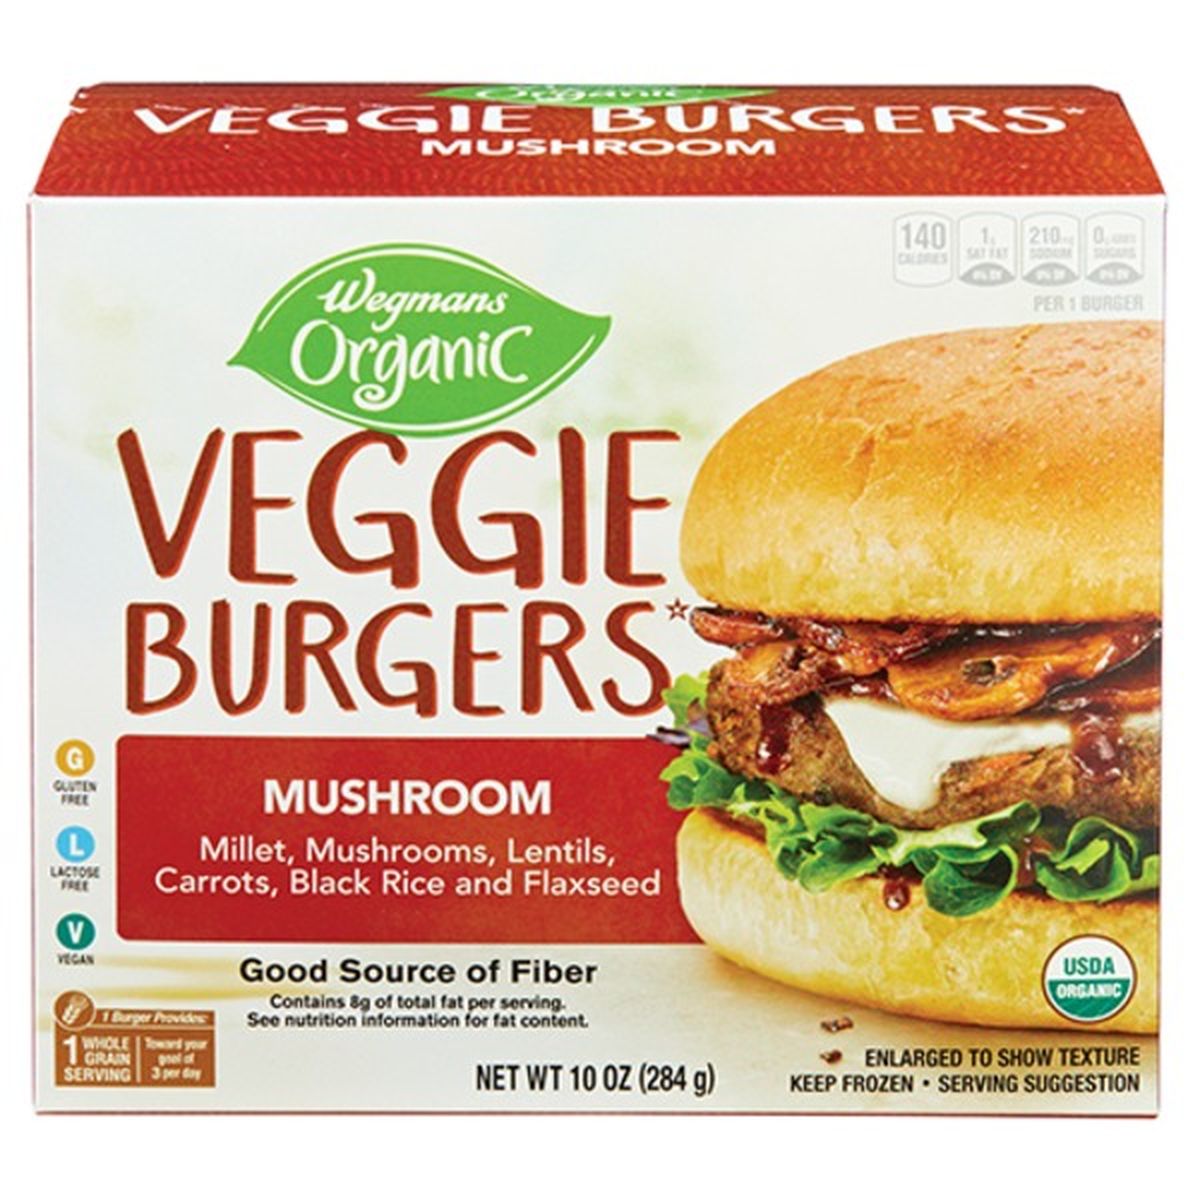 Calories in Wegmans Organic Veggie Burgers, Mushroom